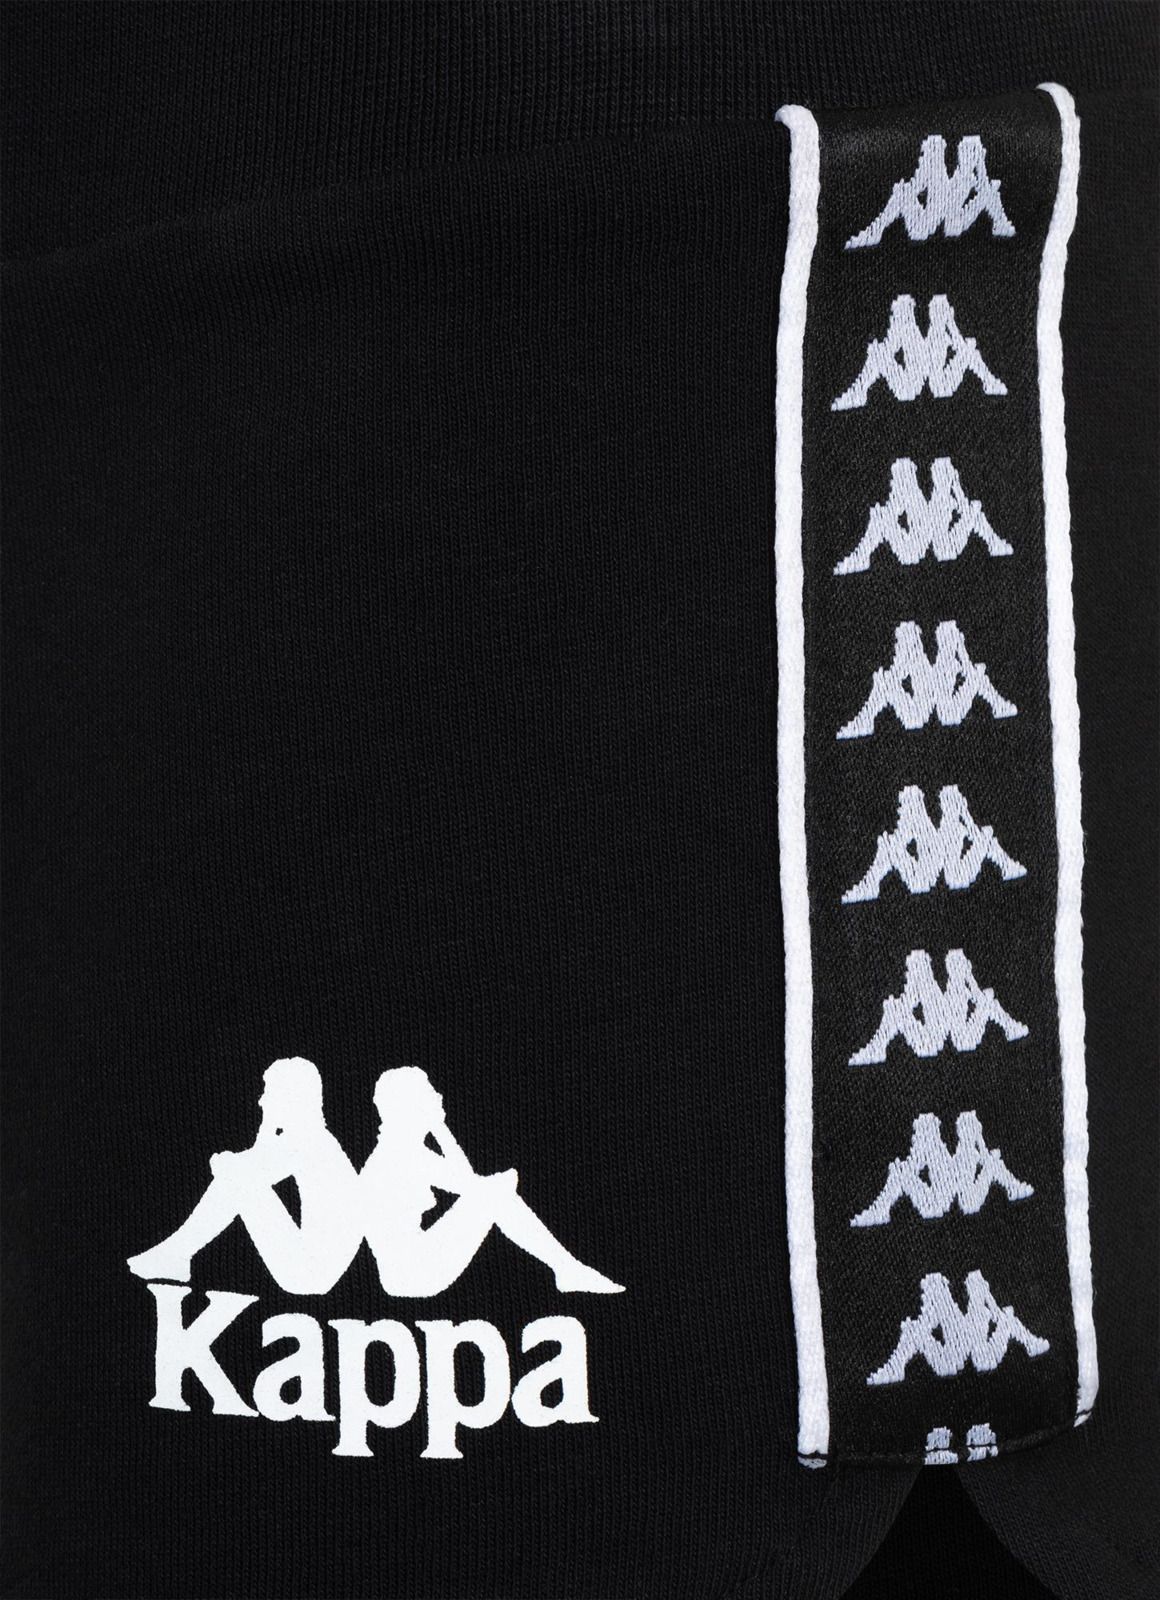    Kappa Girls' Shorts, : . 304KS60-99.  164